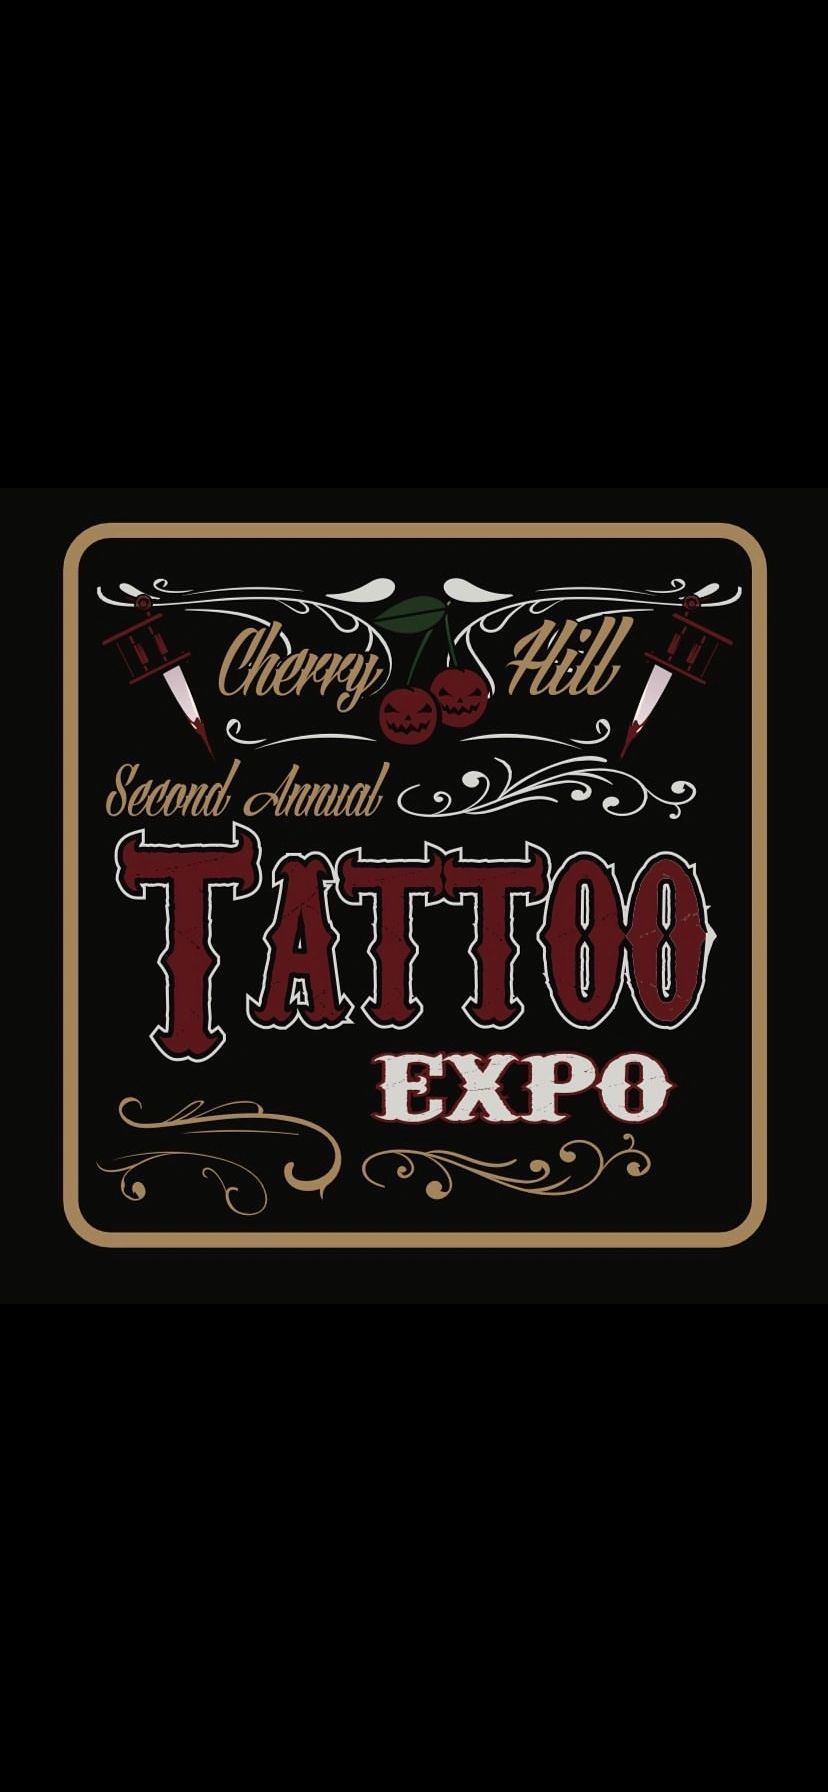 The Cherry Hill Tattoo Expo